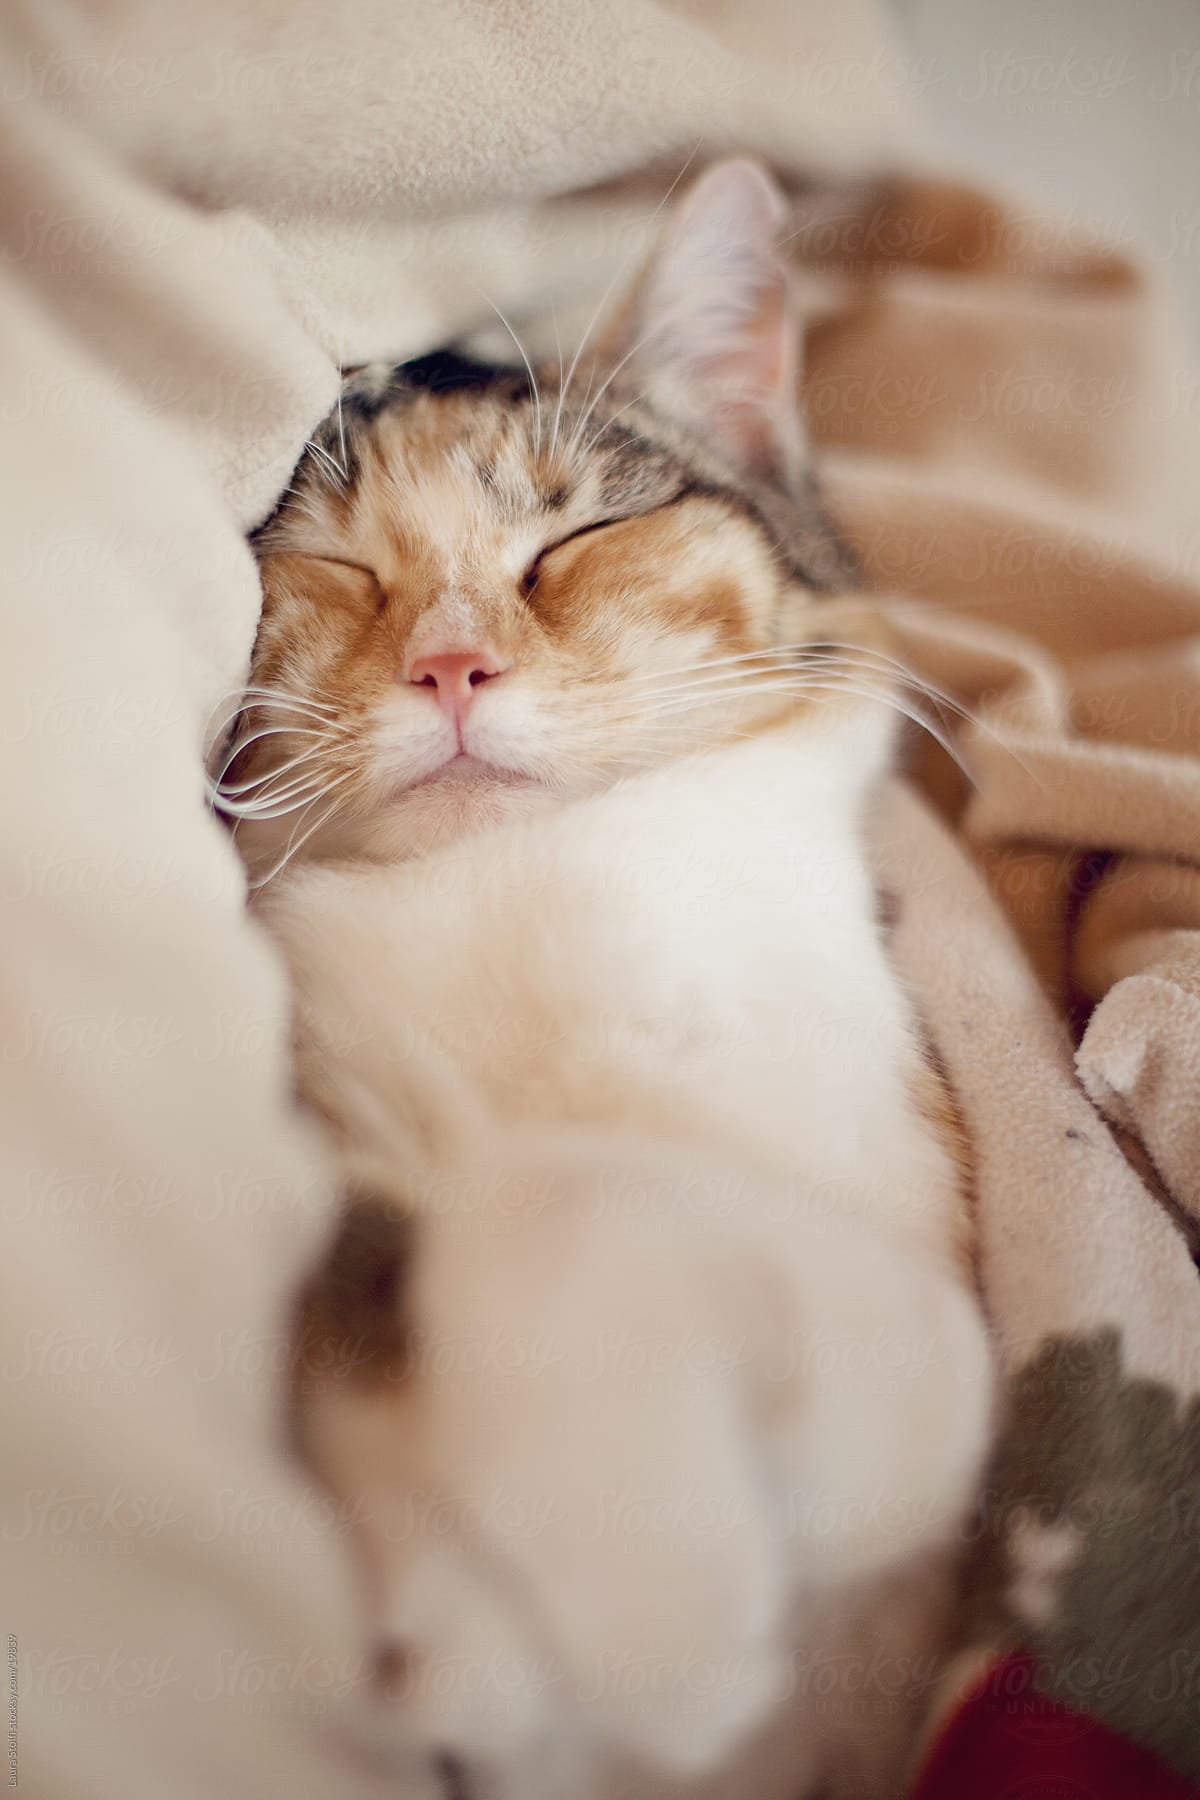 Tabby cat sleeping peacefully in warm woolen blanket